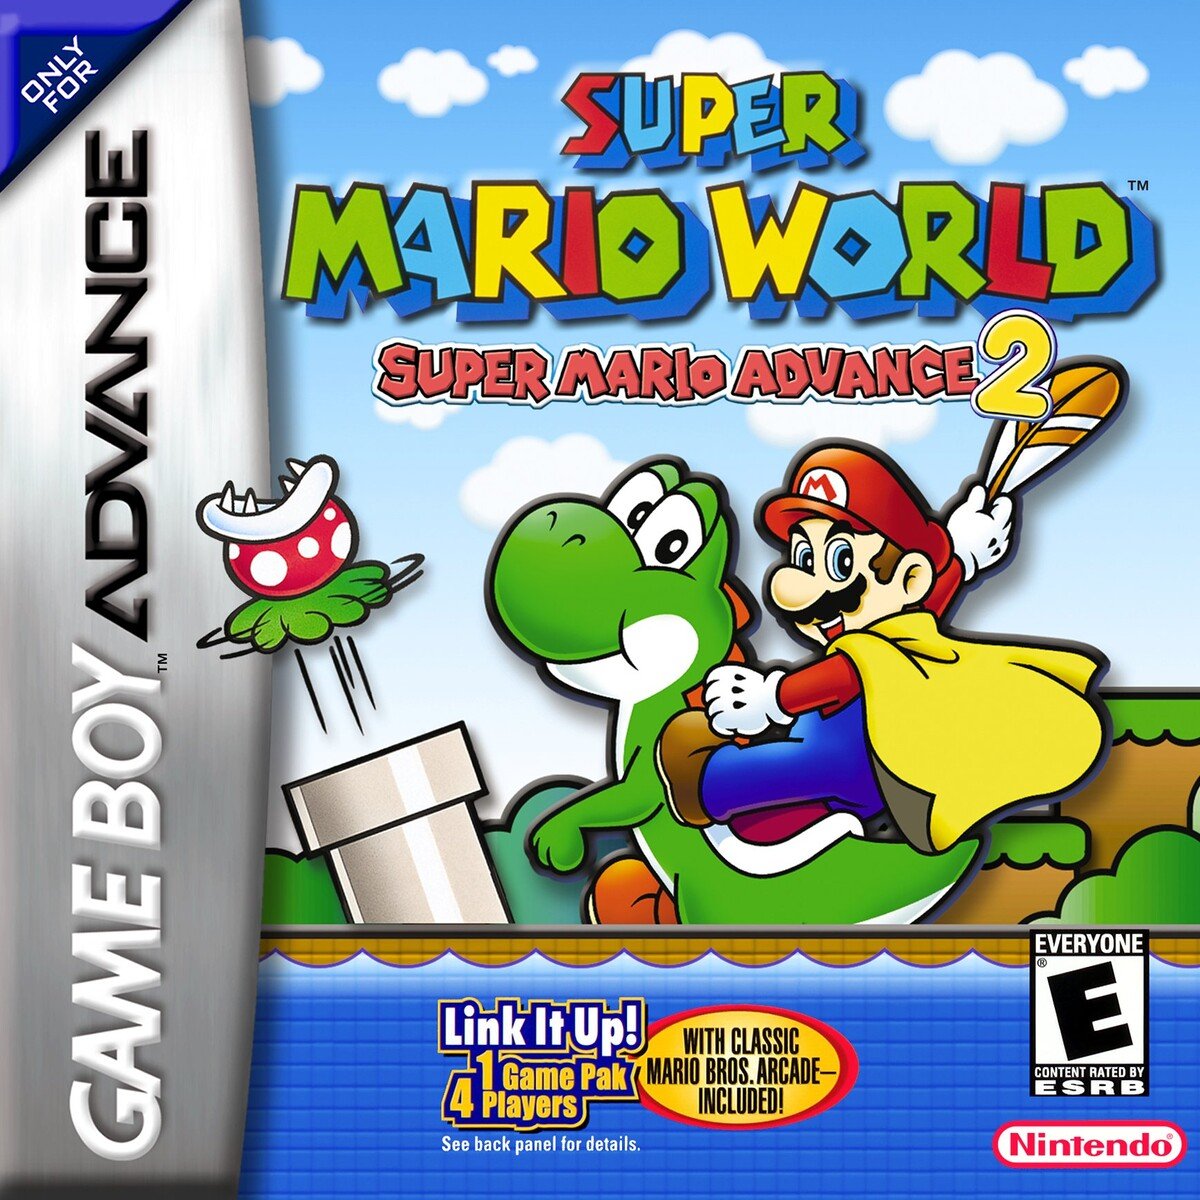 Super Mario World: Super Advance 2 - Super Mario Wiki, Mario encyclopedia